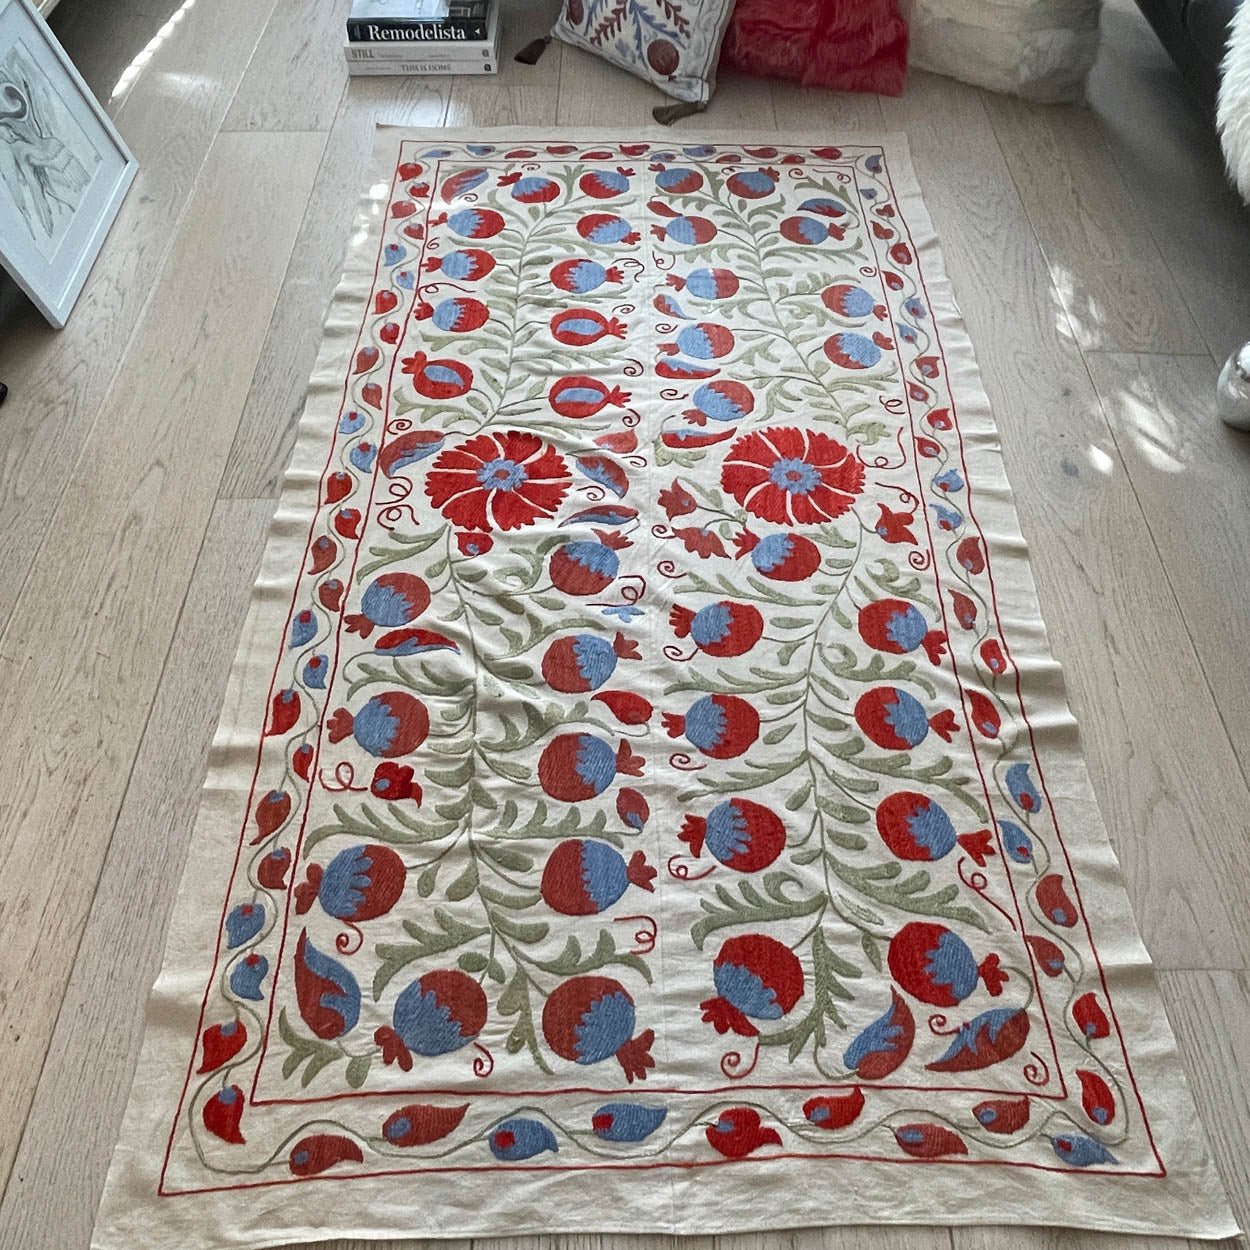 Uzbeki Suzani Hand Embroidered Textile Wall Hanging | Home Décor | Throw | 99cm x 180cm SUZ220518007 - Wildash London